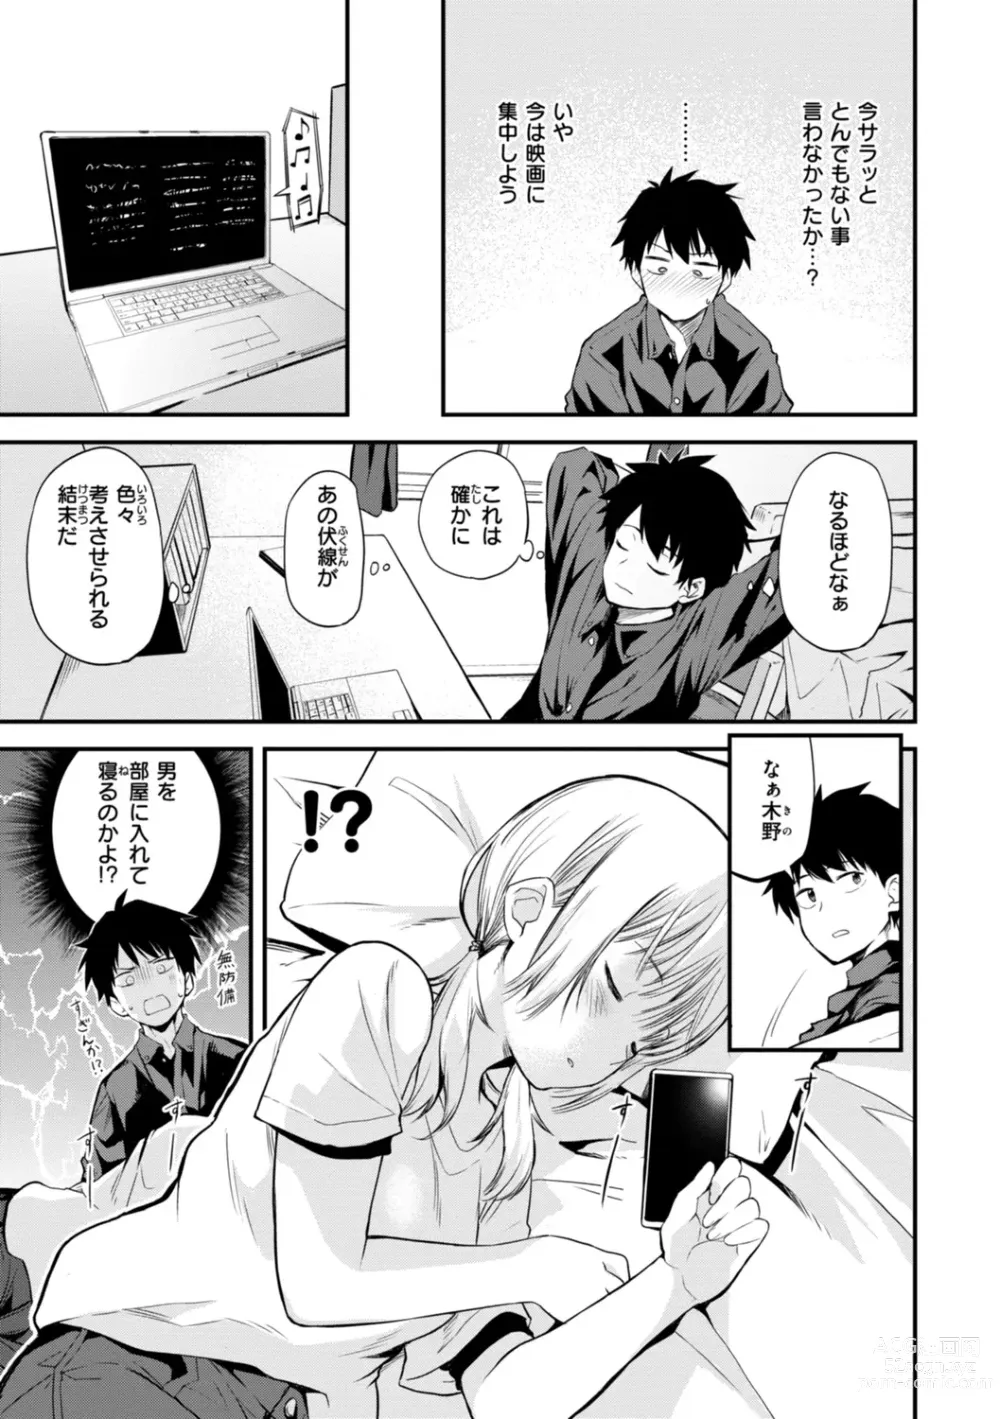 Page 7 of manga Jaa, Ecchi Shichau? - Shall we have H then?